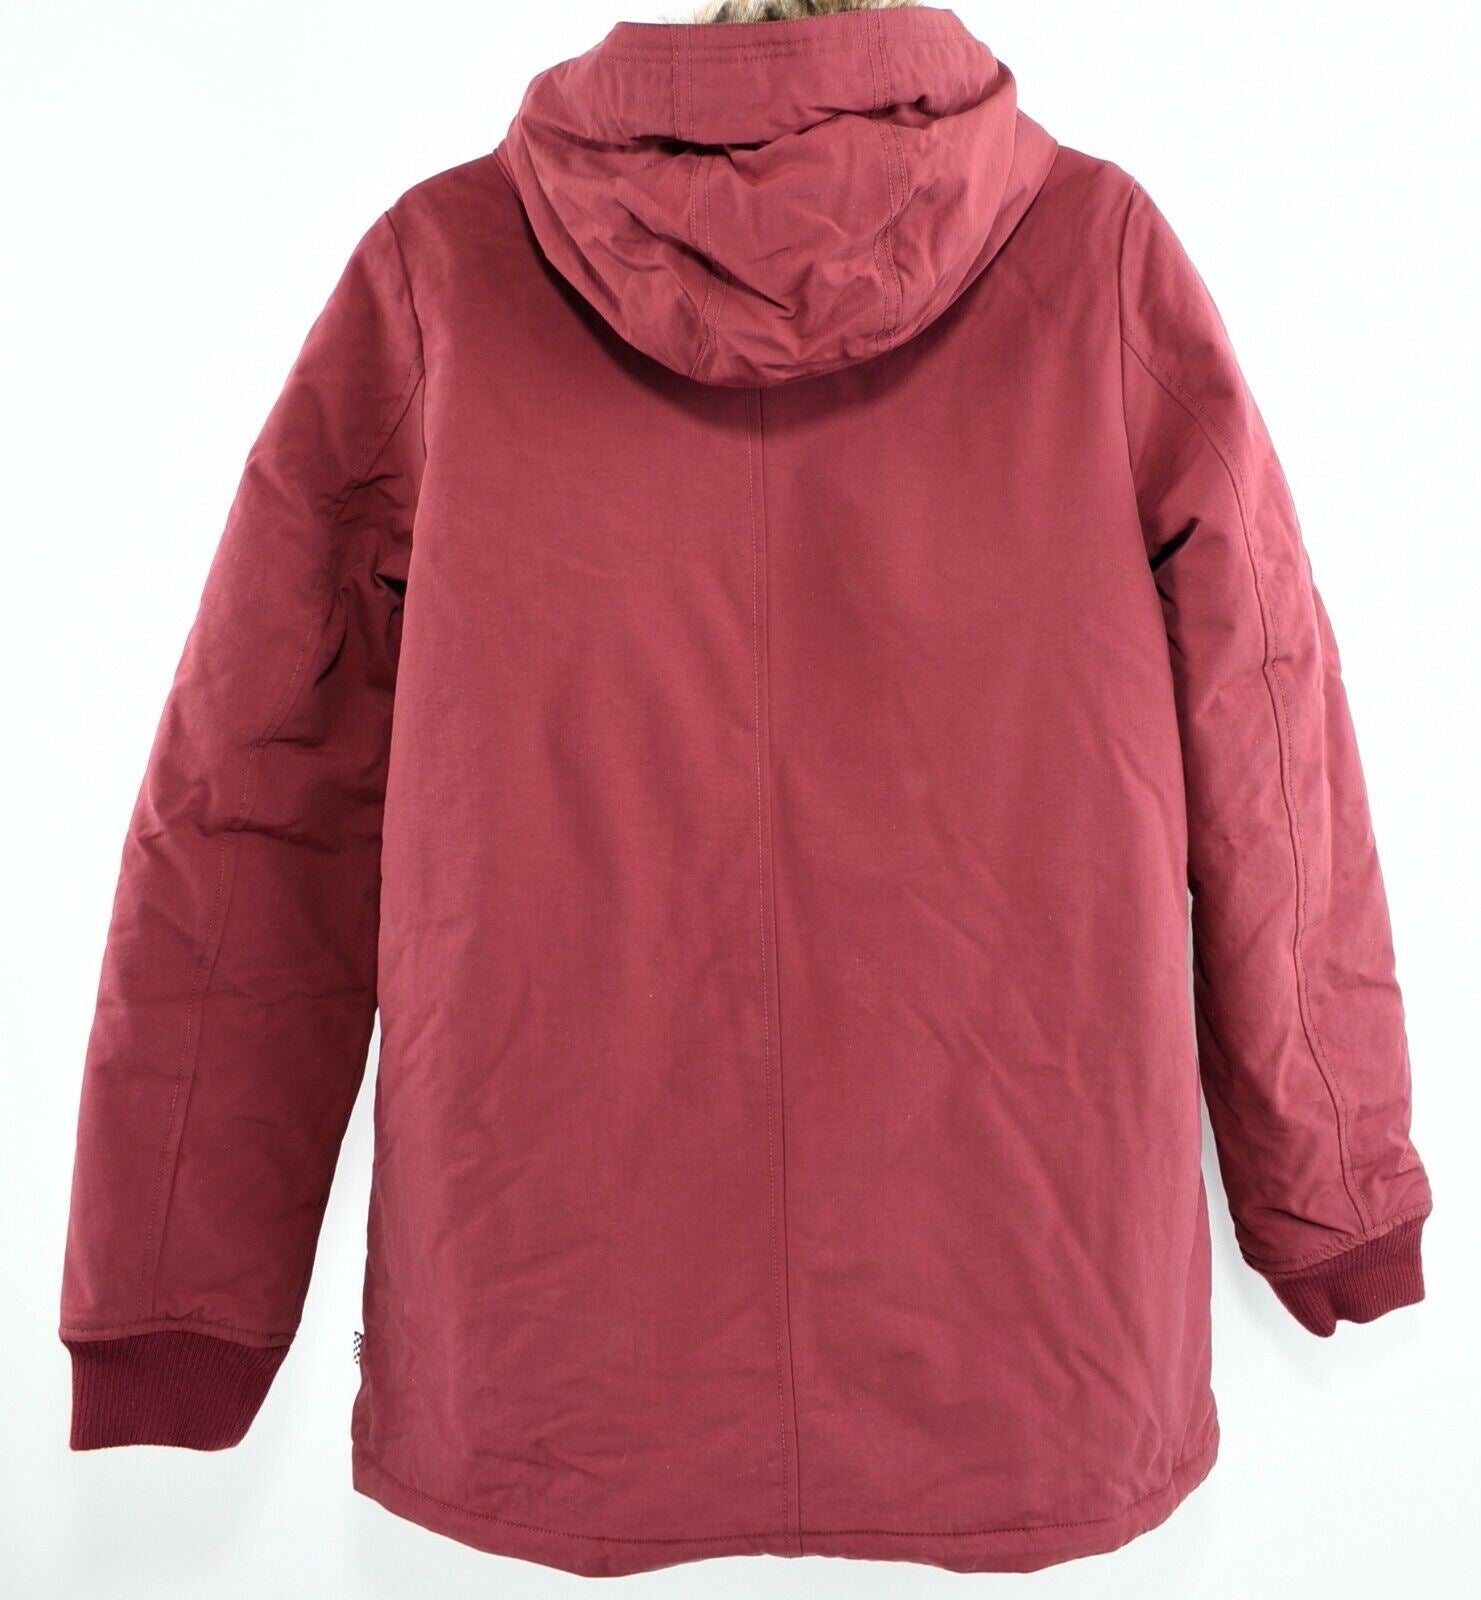 VANS Women's Hooded Warm Padded Parka Jacket Coat, Burgundy Red, size S